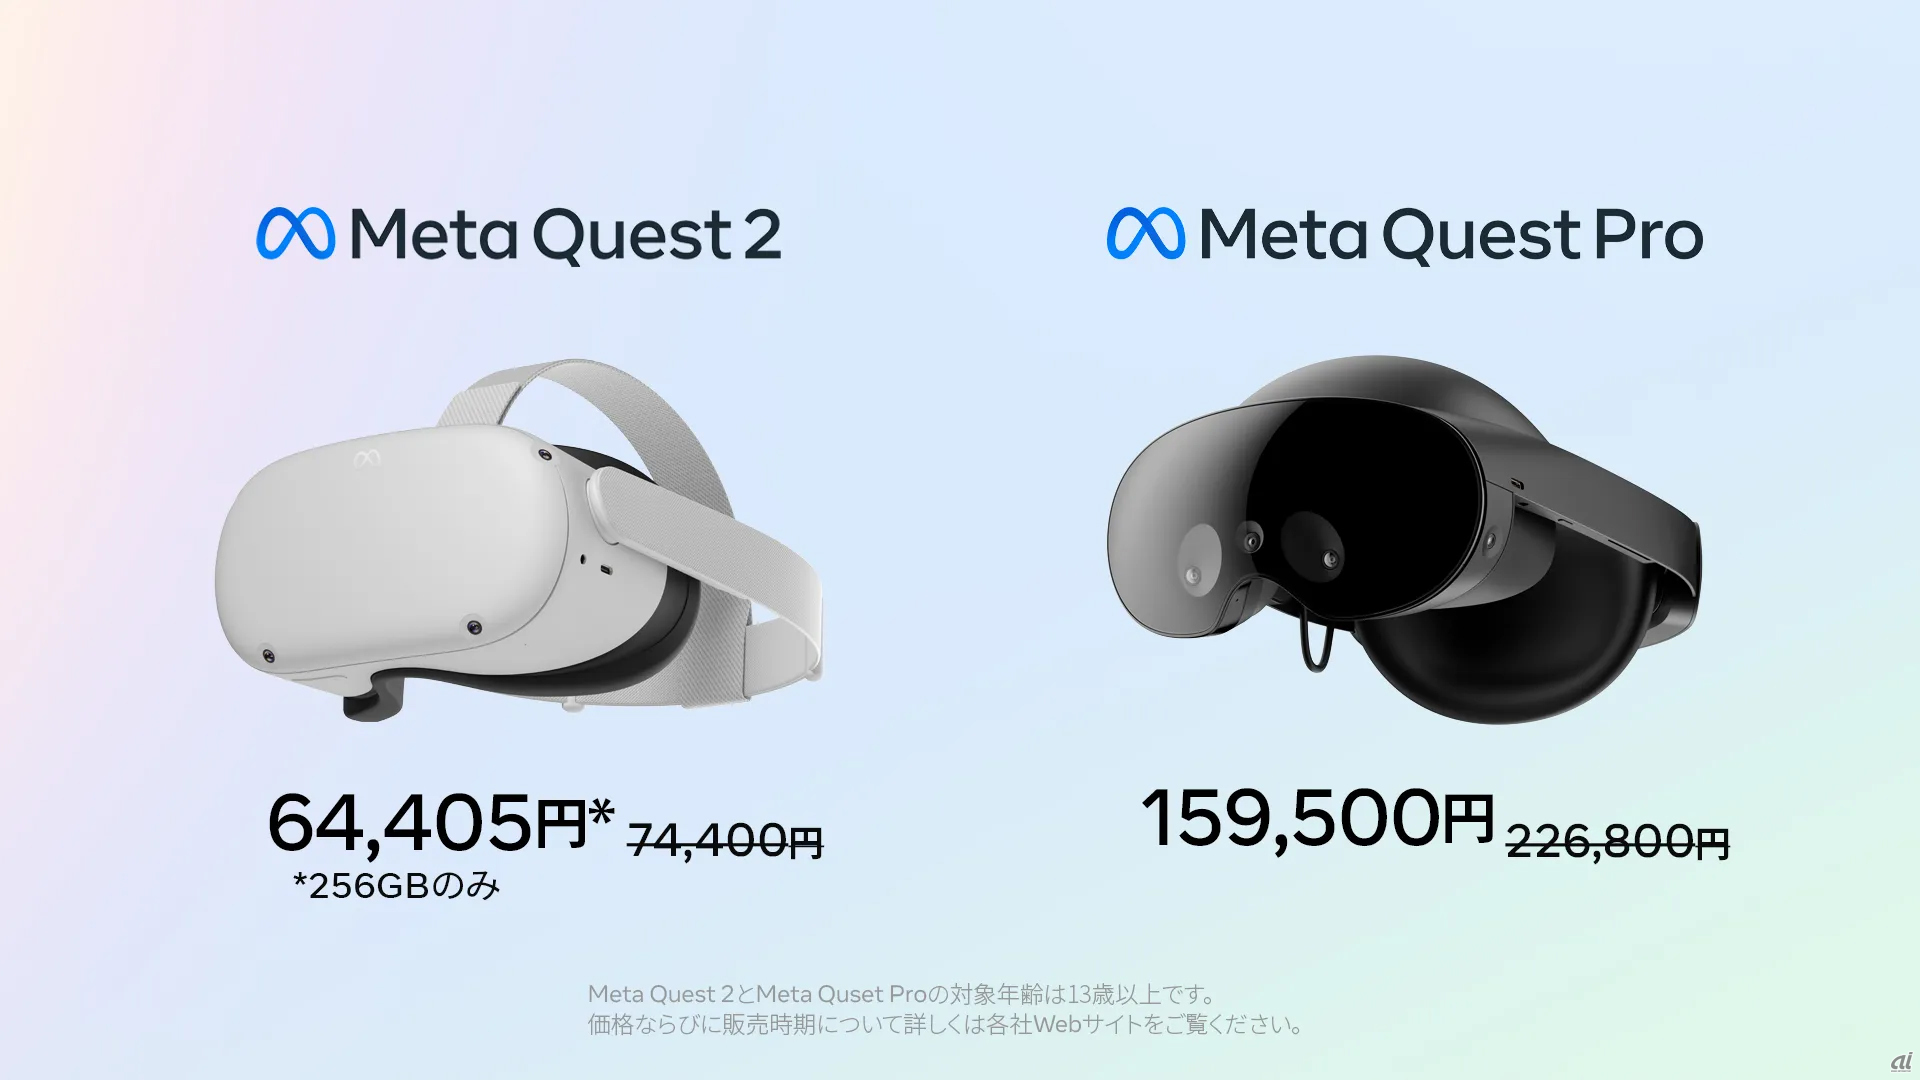 Meta Quest Pro 256GBテレビ・オーディオ・カメラ